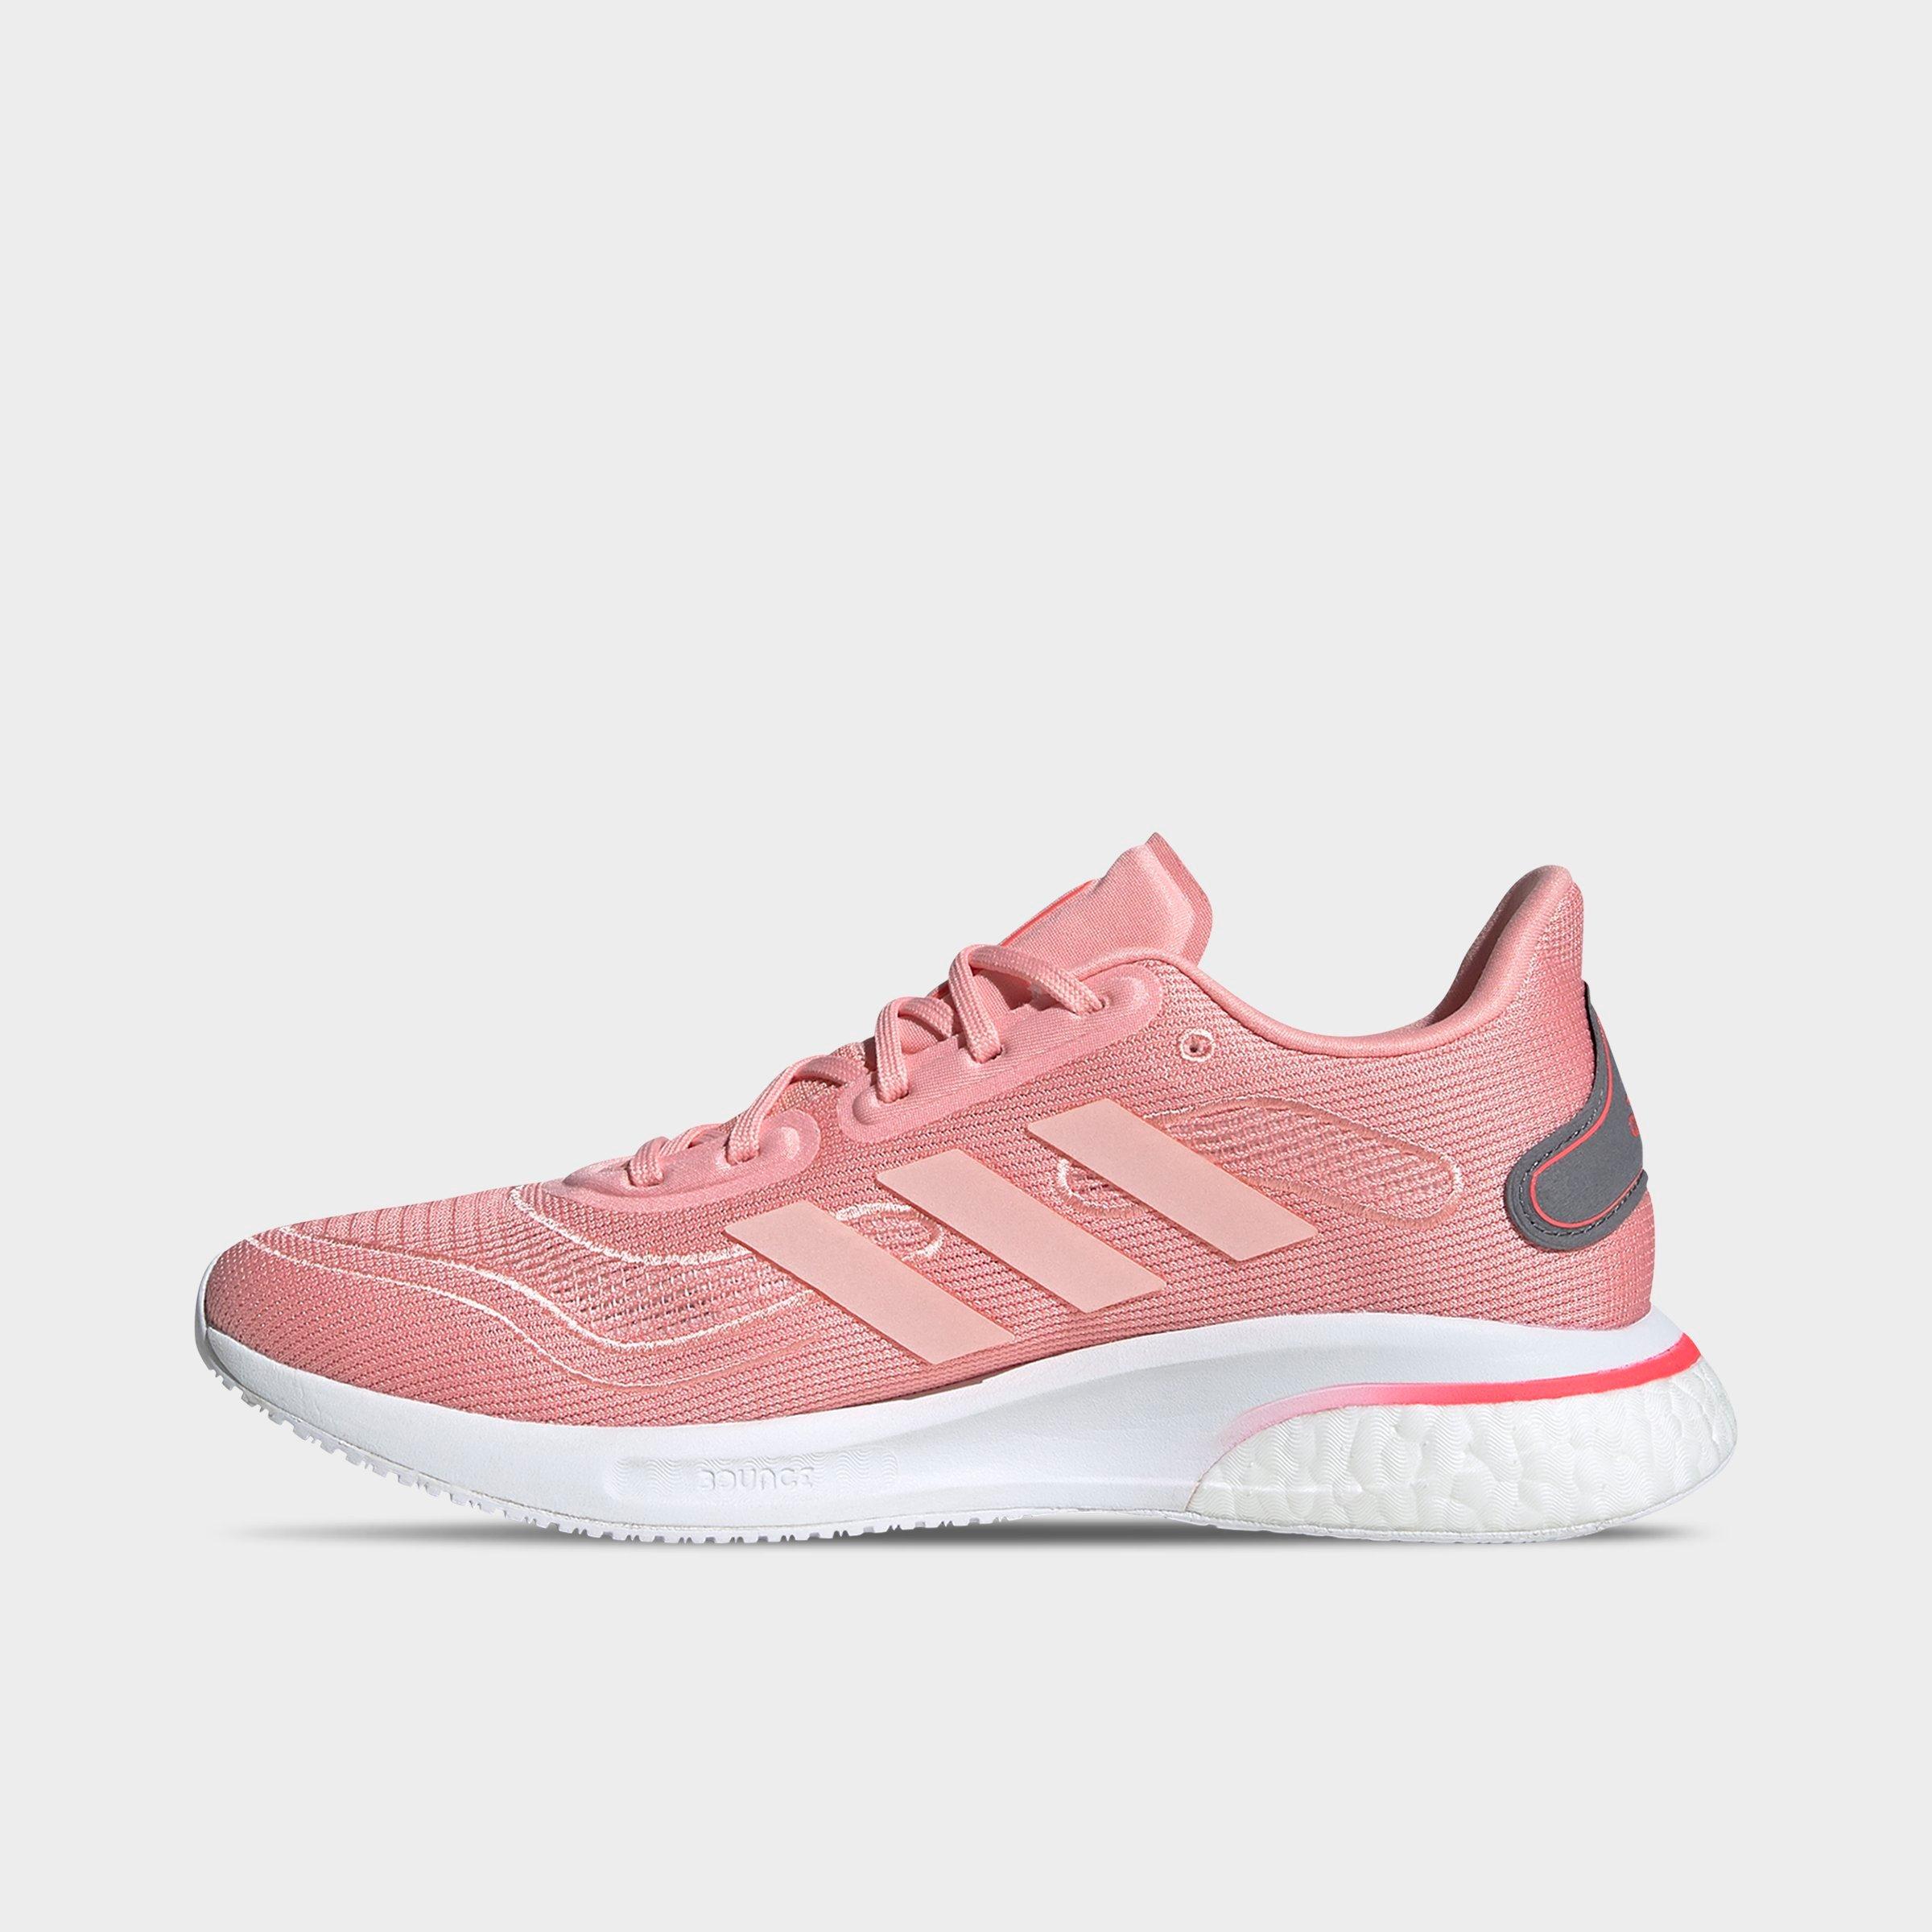 finish line pink adidas